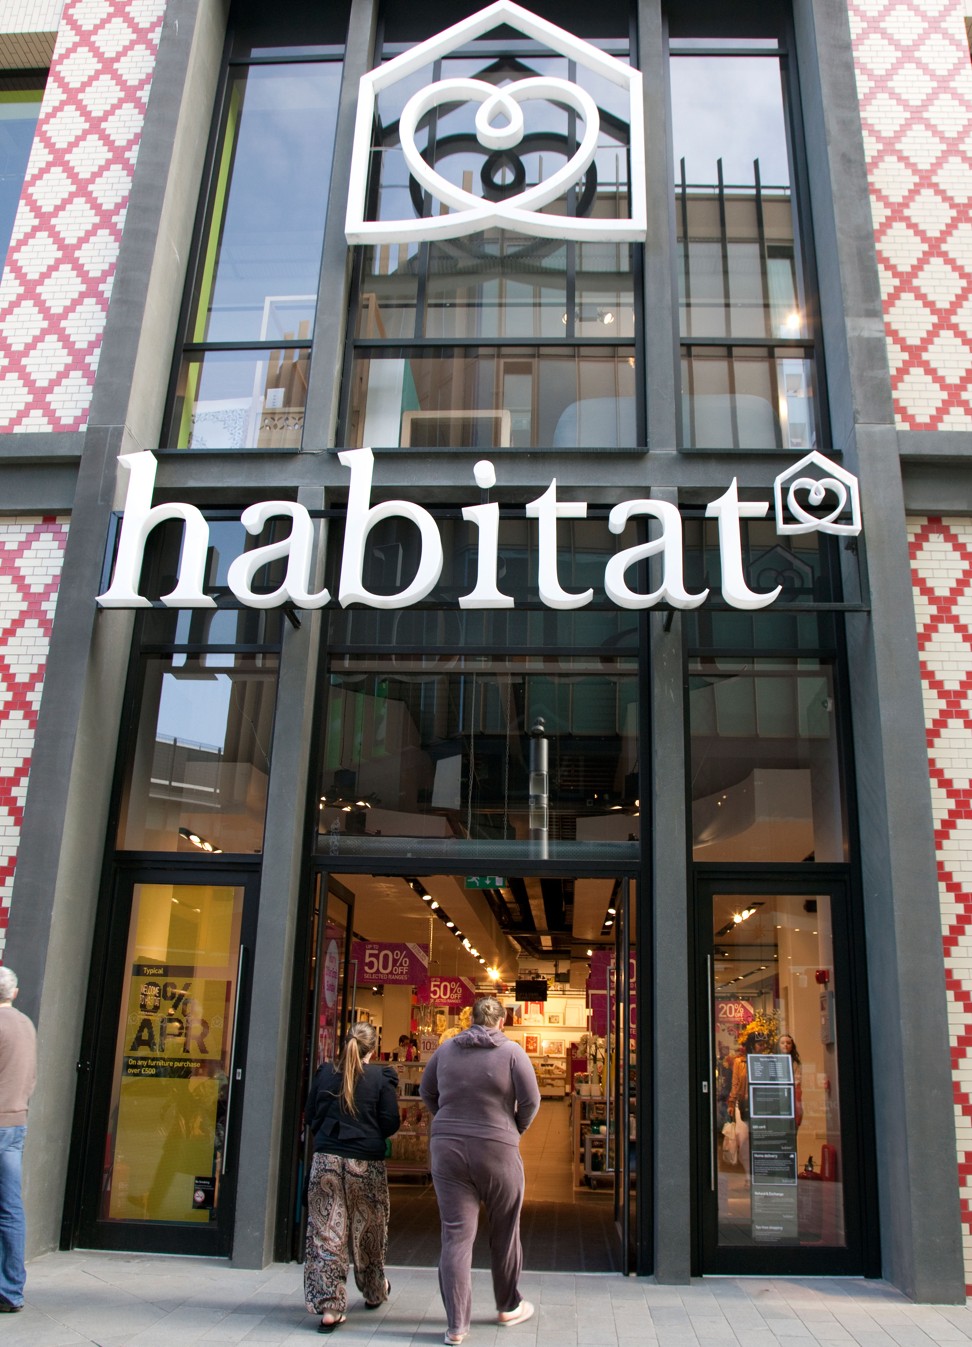 A Habitat store in Liverpool, Britain. Photo: Alamy